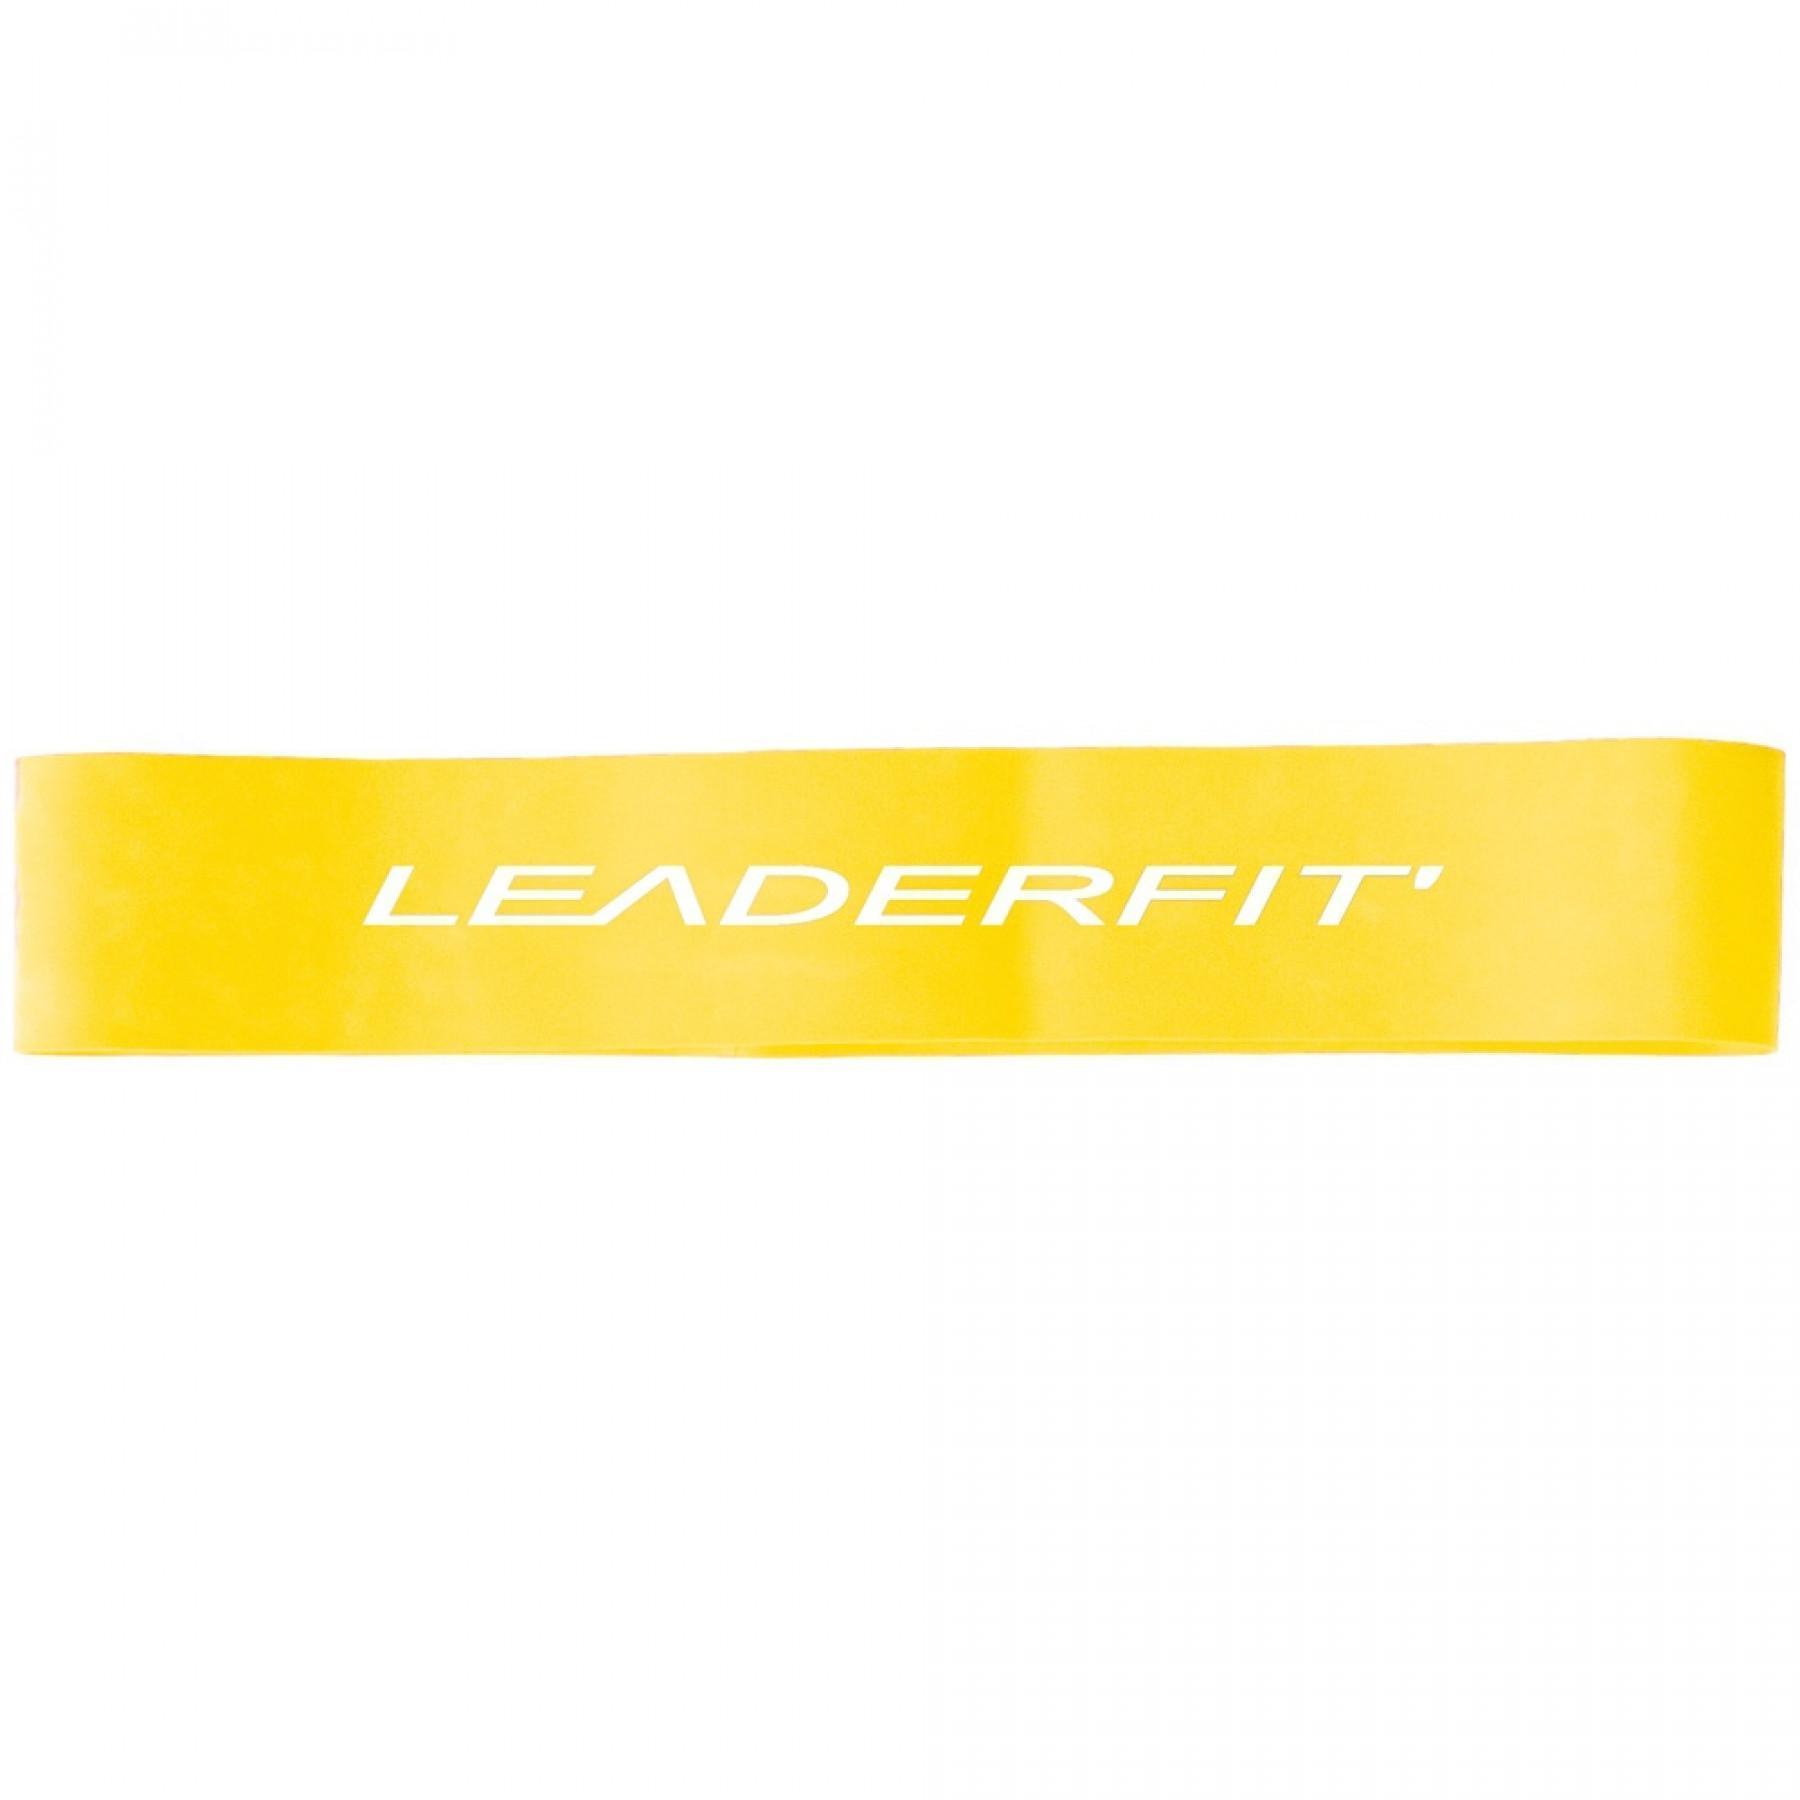 Mini-band Leader Fit light